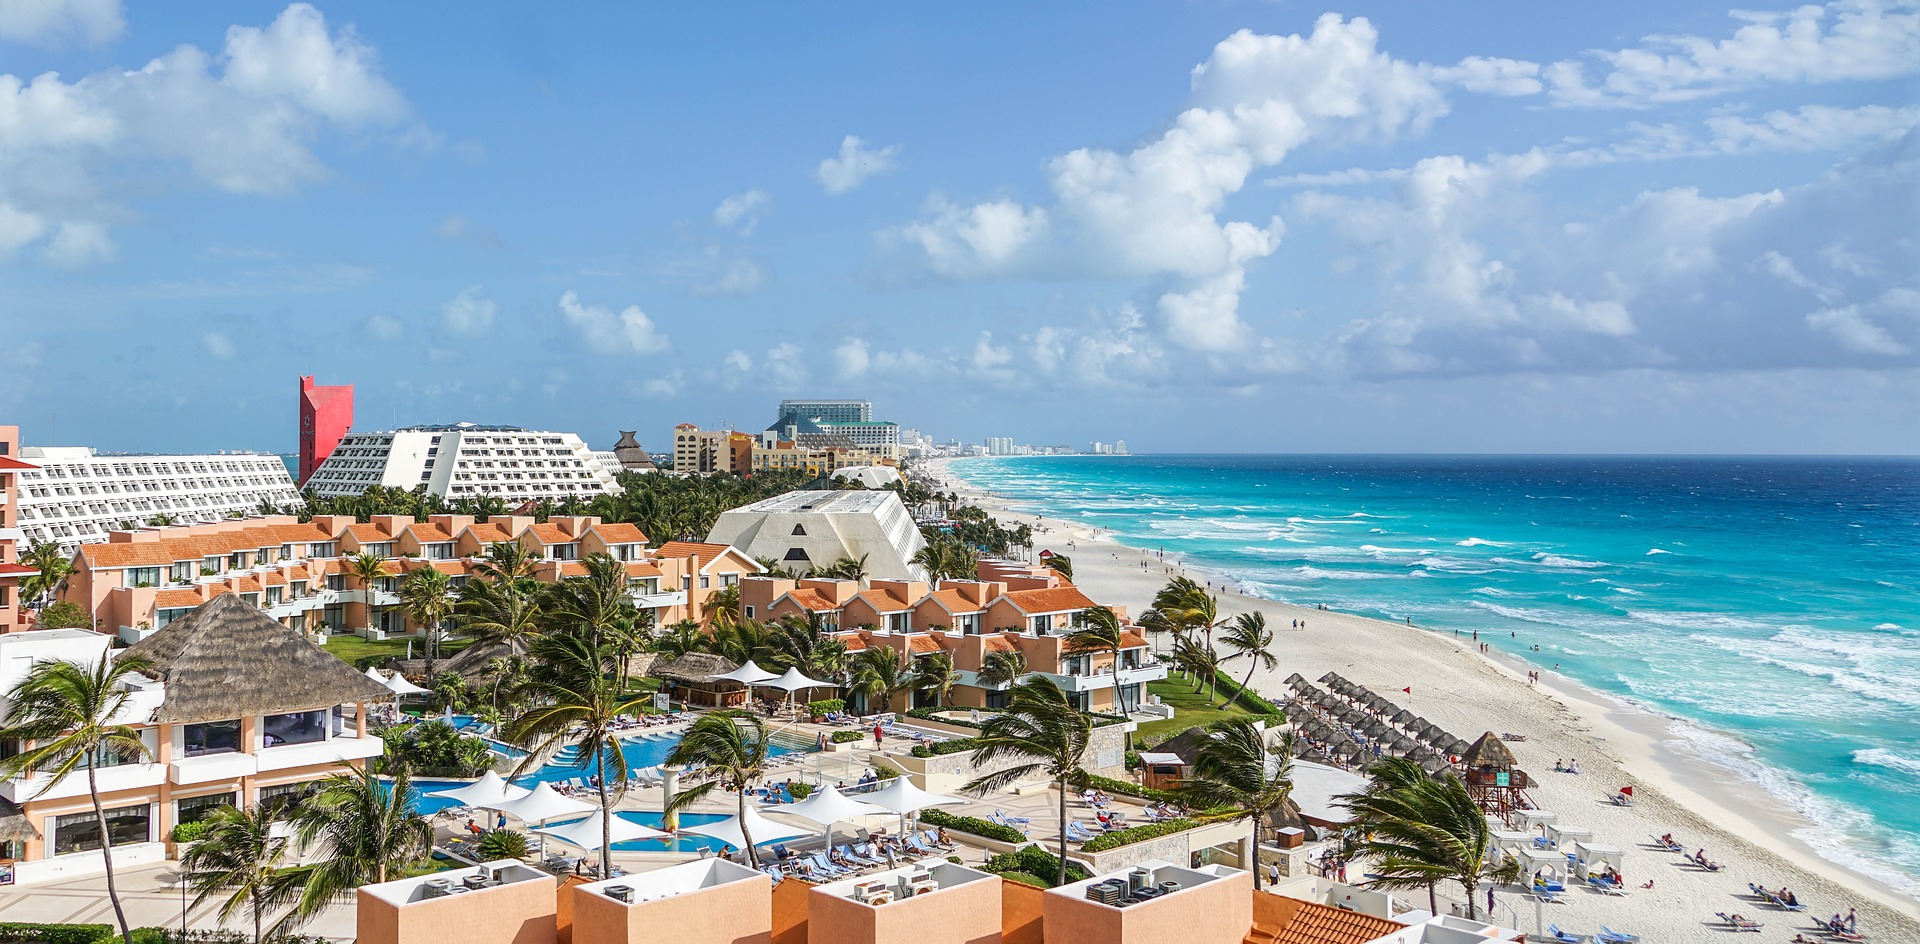 Best beach resorts in Cancun Mexico